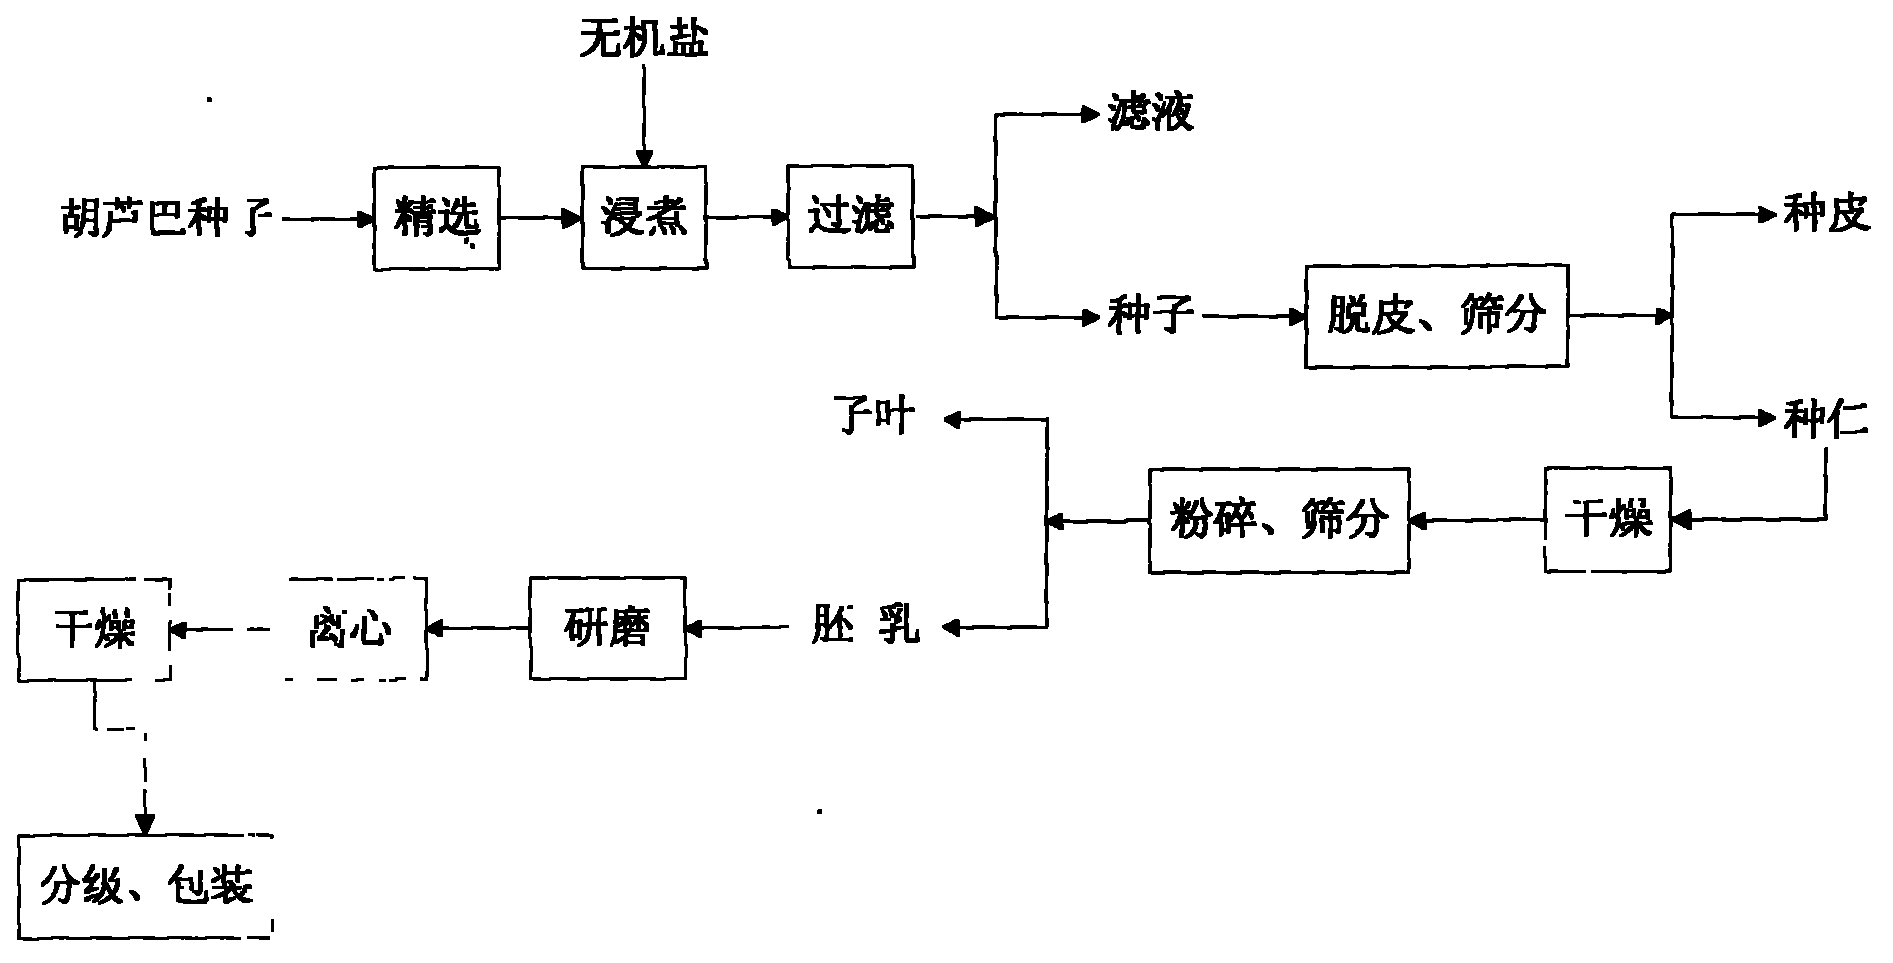 Production method of fenugreek gum